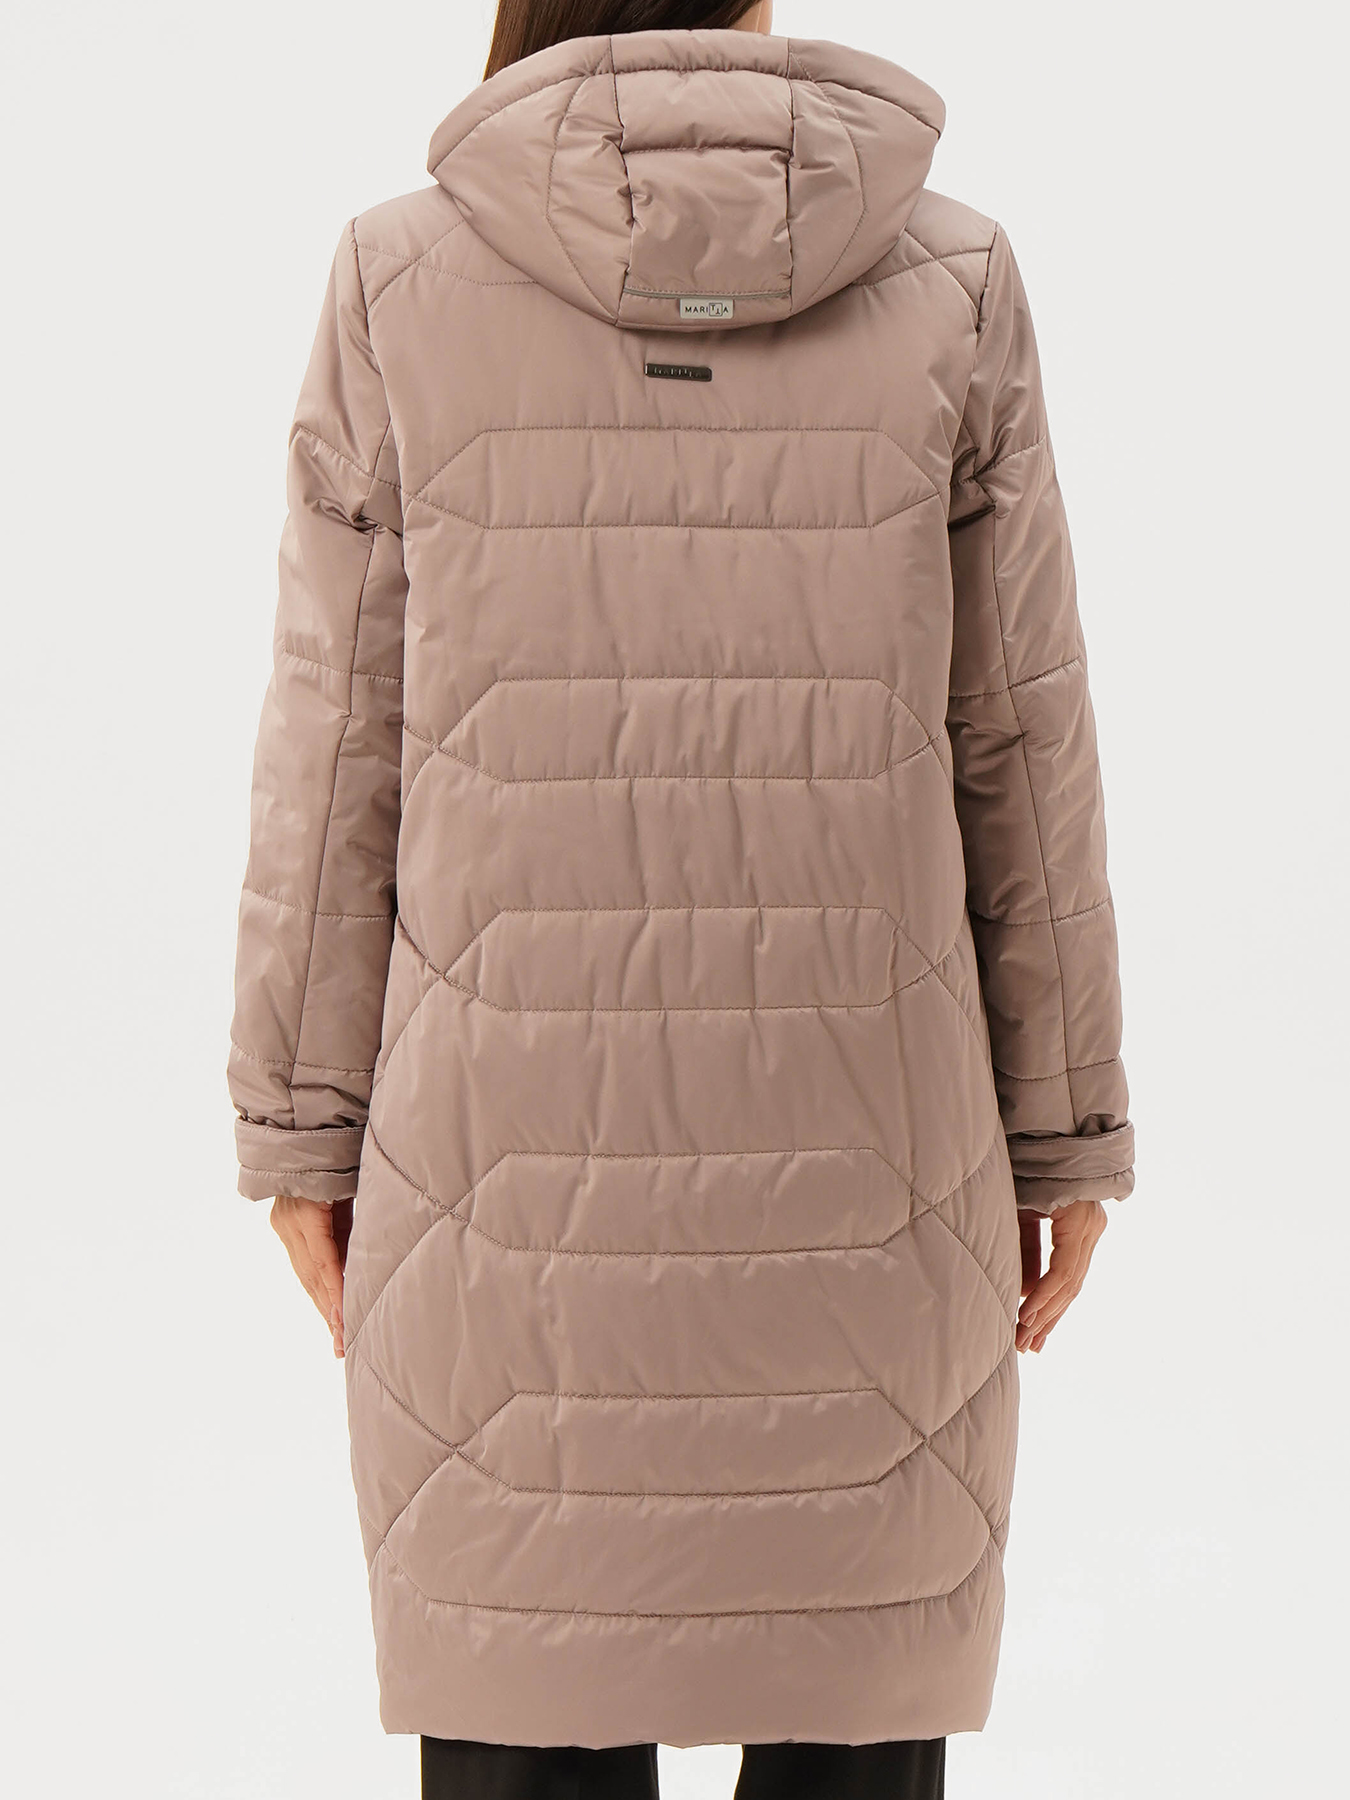 Пальто зимнее Maritta 433520-026, цвет бежевый, размер 50 - фото 6